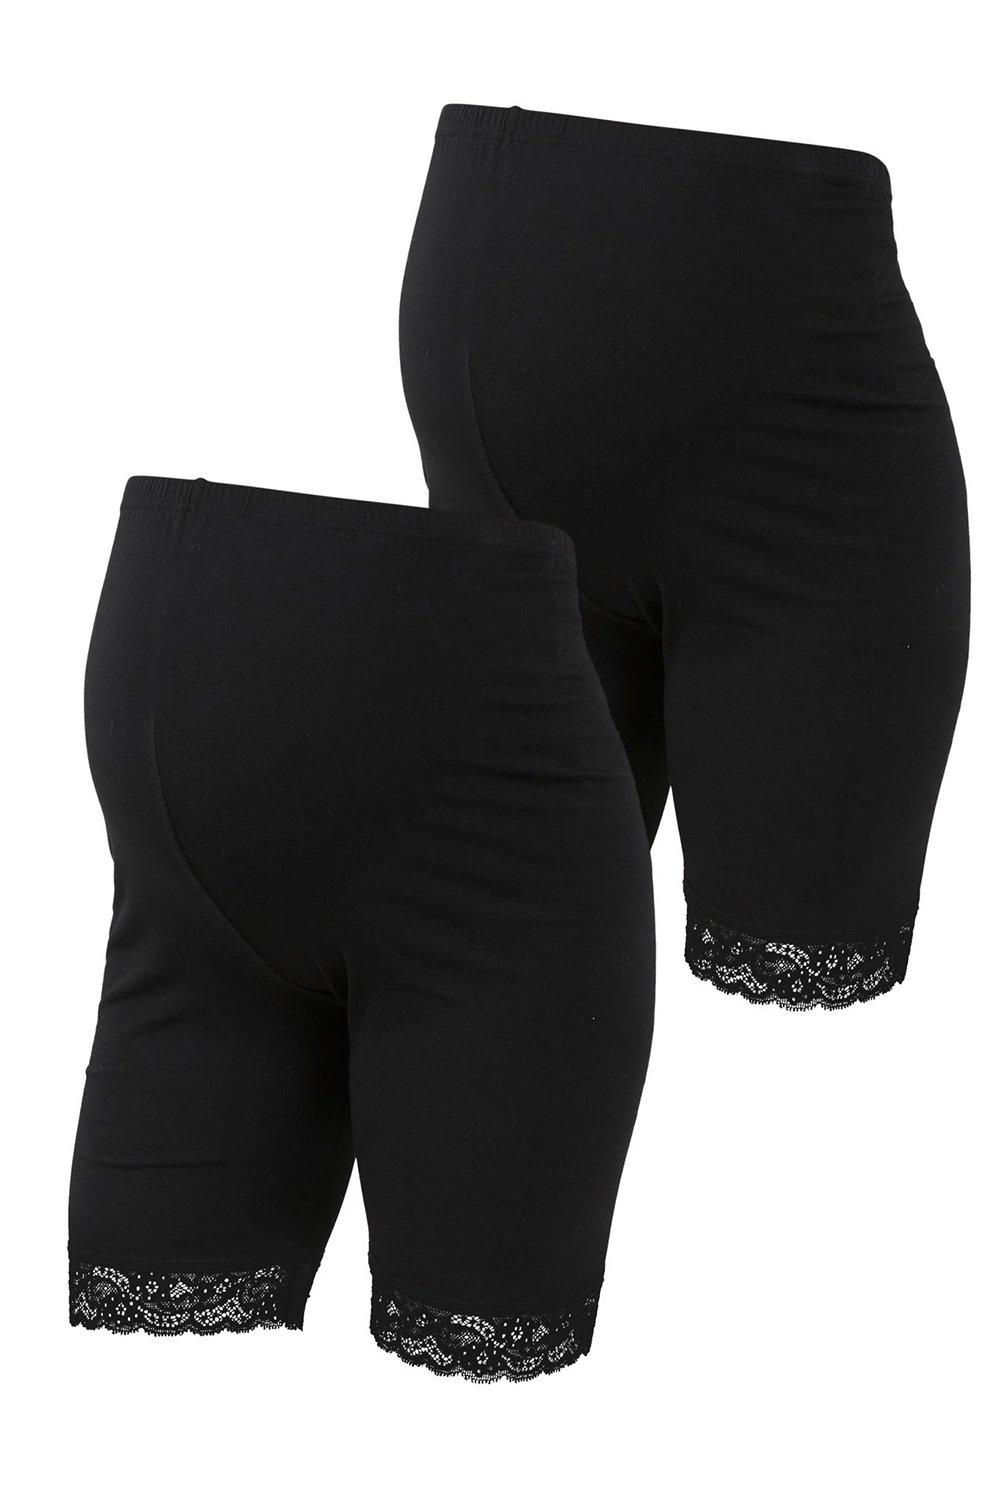 mamalicious lenna pack of 2 lace trim cycling shorts - womens - black - size: small